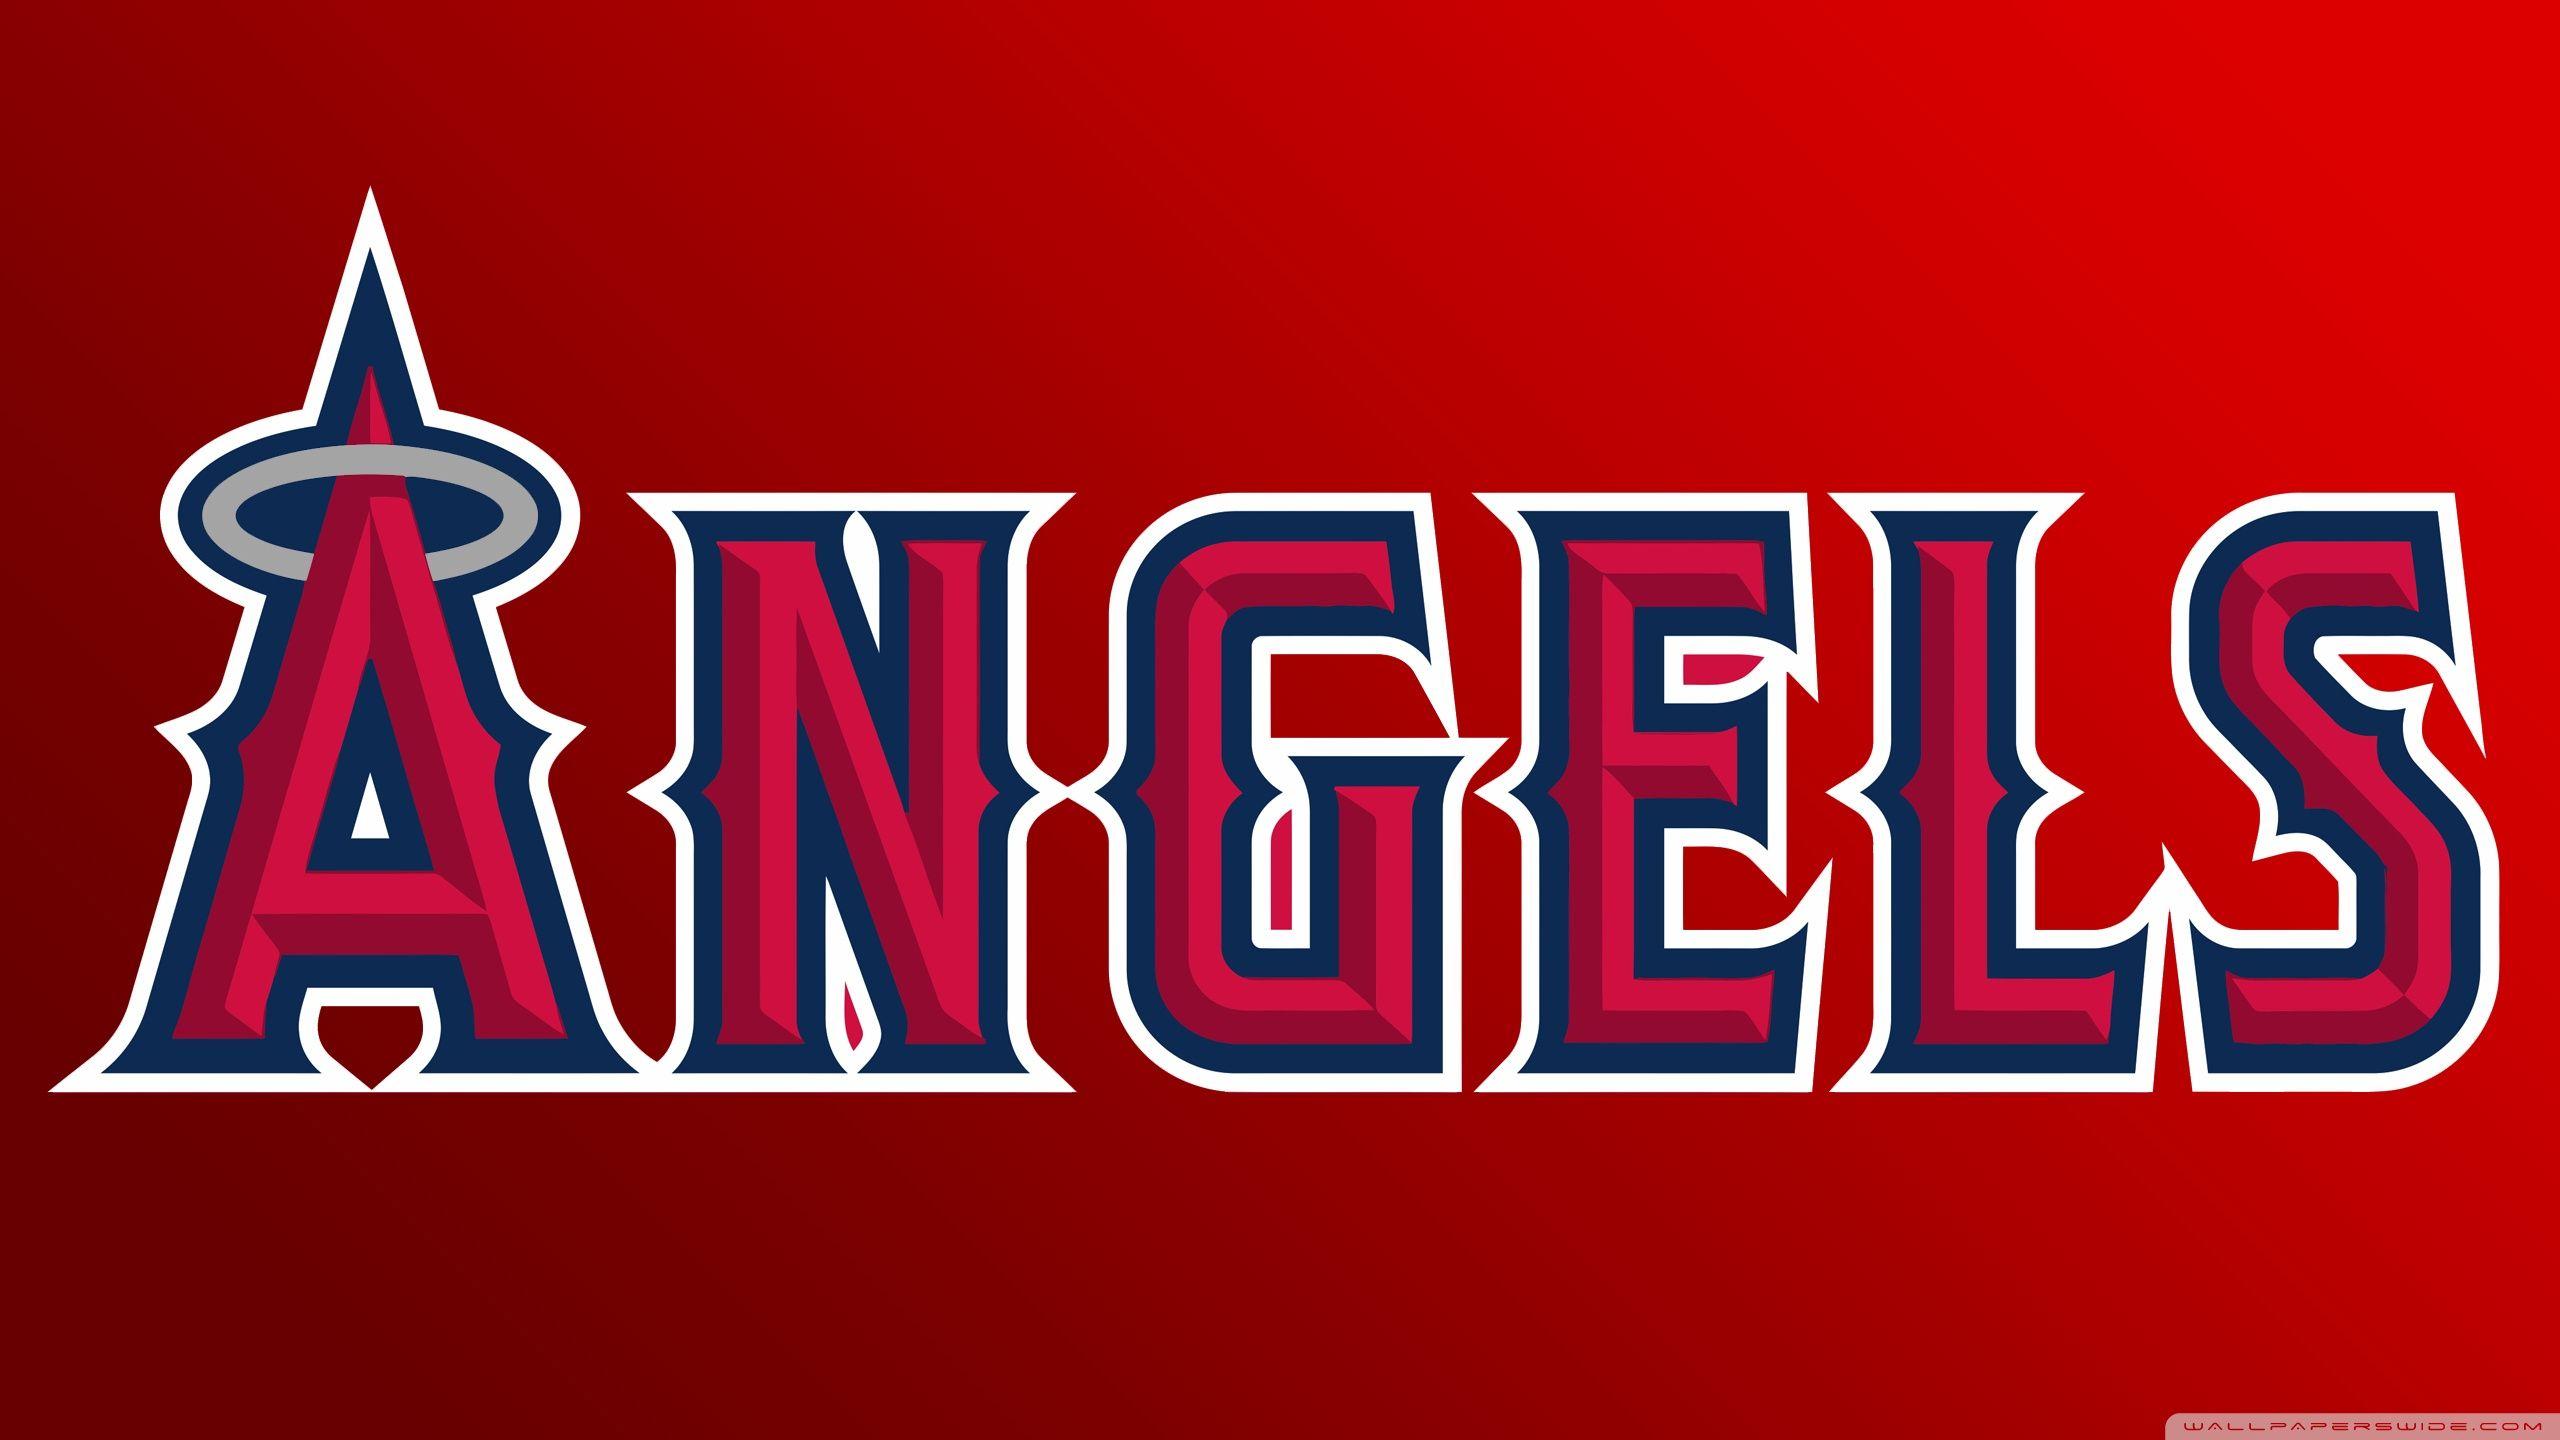 MLB Angels Logo - Free Angels Baseball, Download Free Clip Art, Free Clip Art on ...